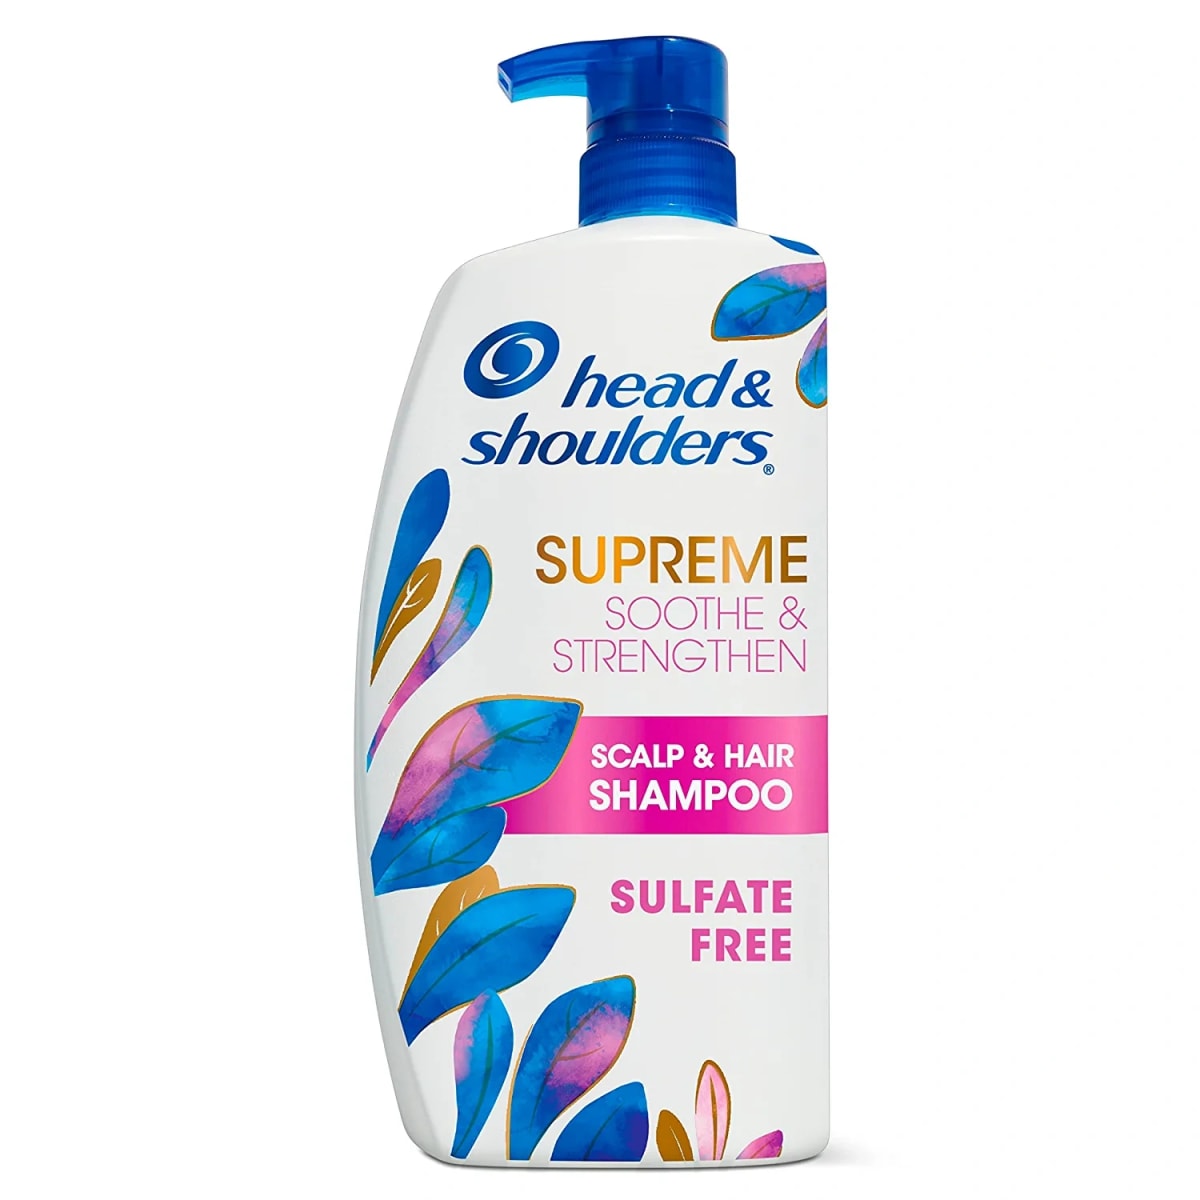 Supreme Sulfate Free Dandruff Shampoo with Argan Oil, Anti-Dandruff Treatment, Soothe & Strengthen